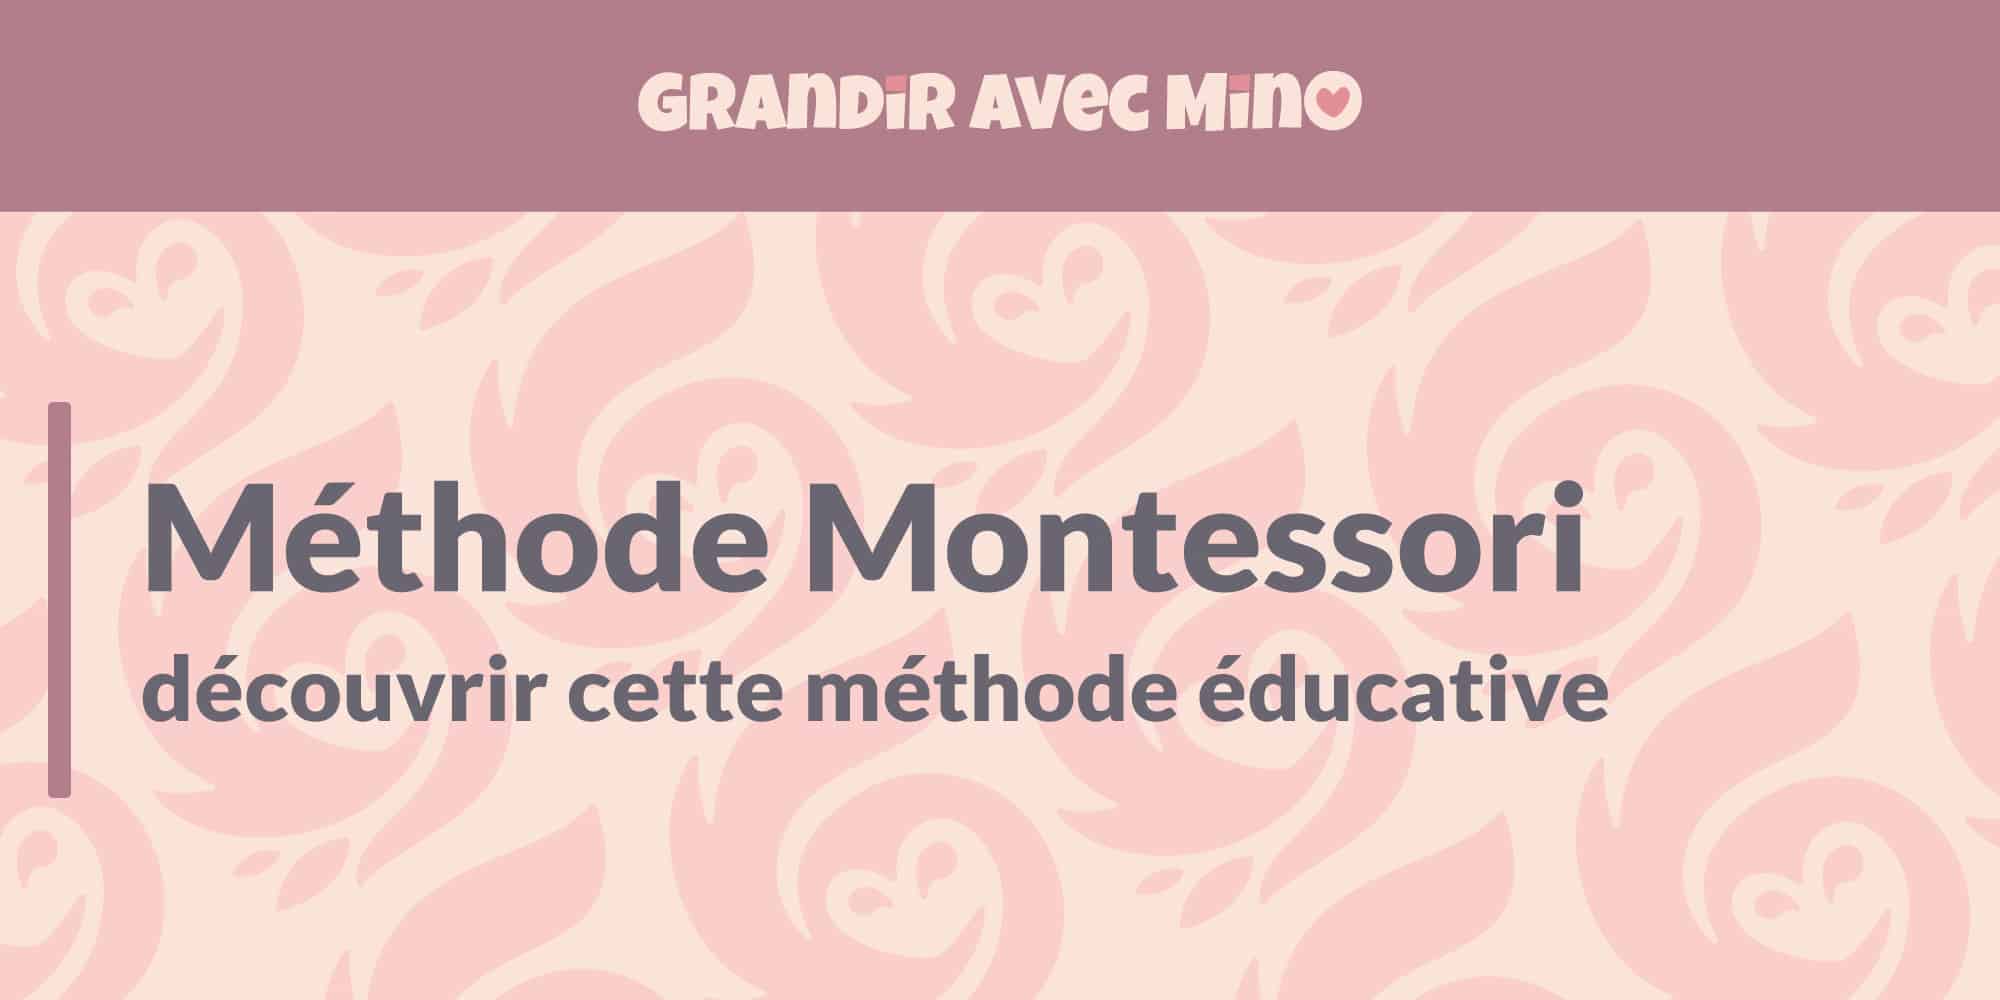 methode montessori methode educative